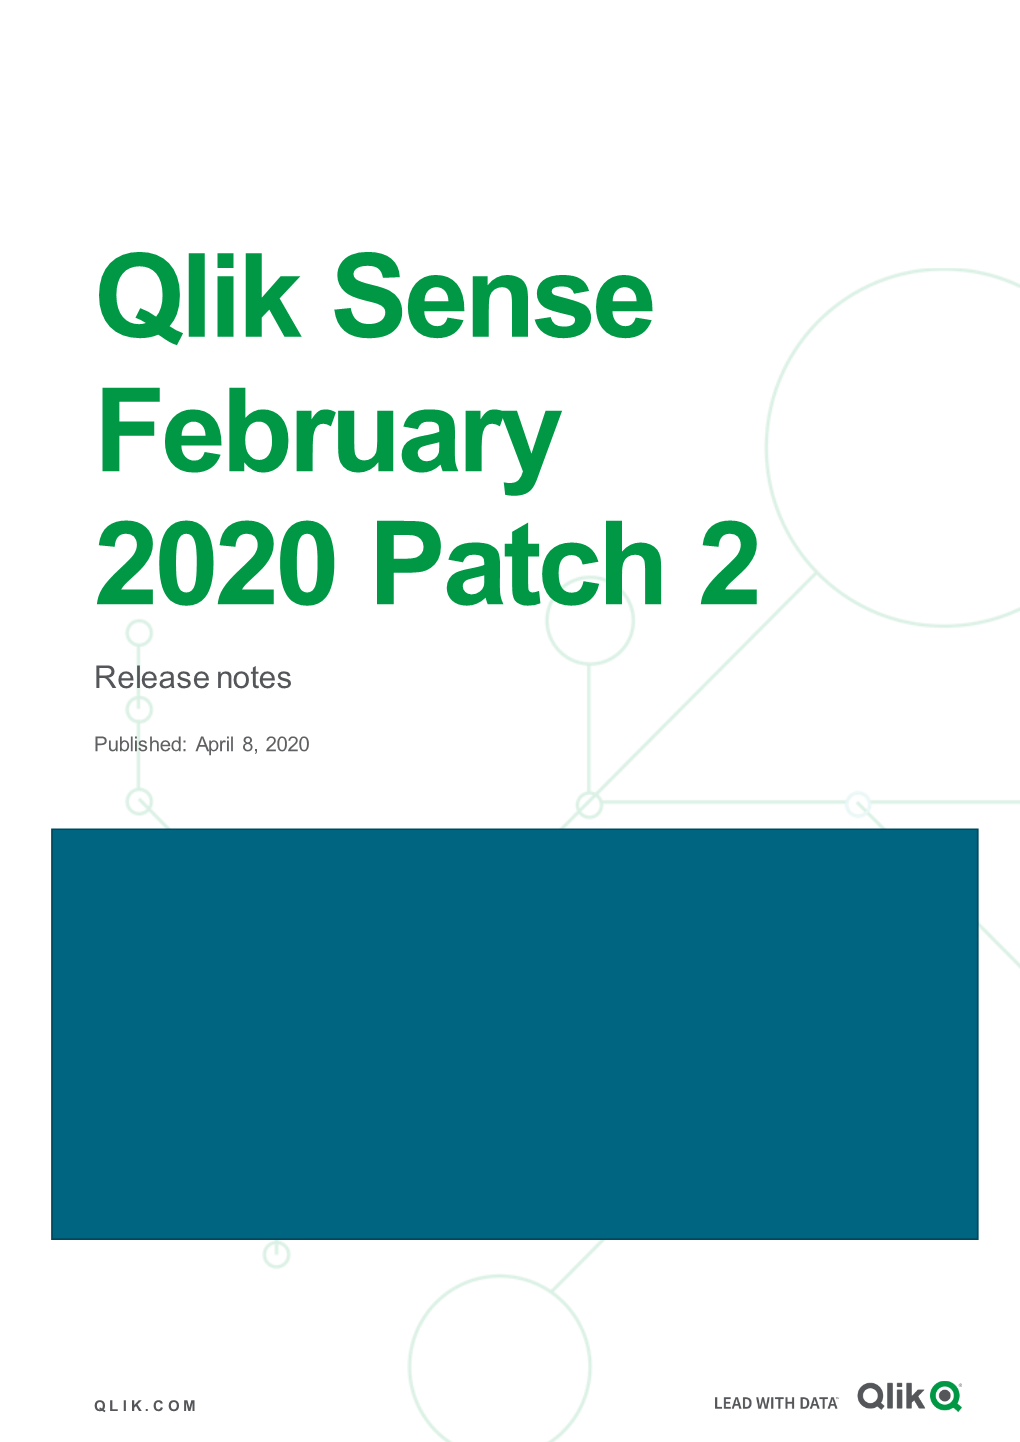 Qlik Sense February 2020 Patch 2